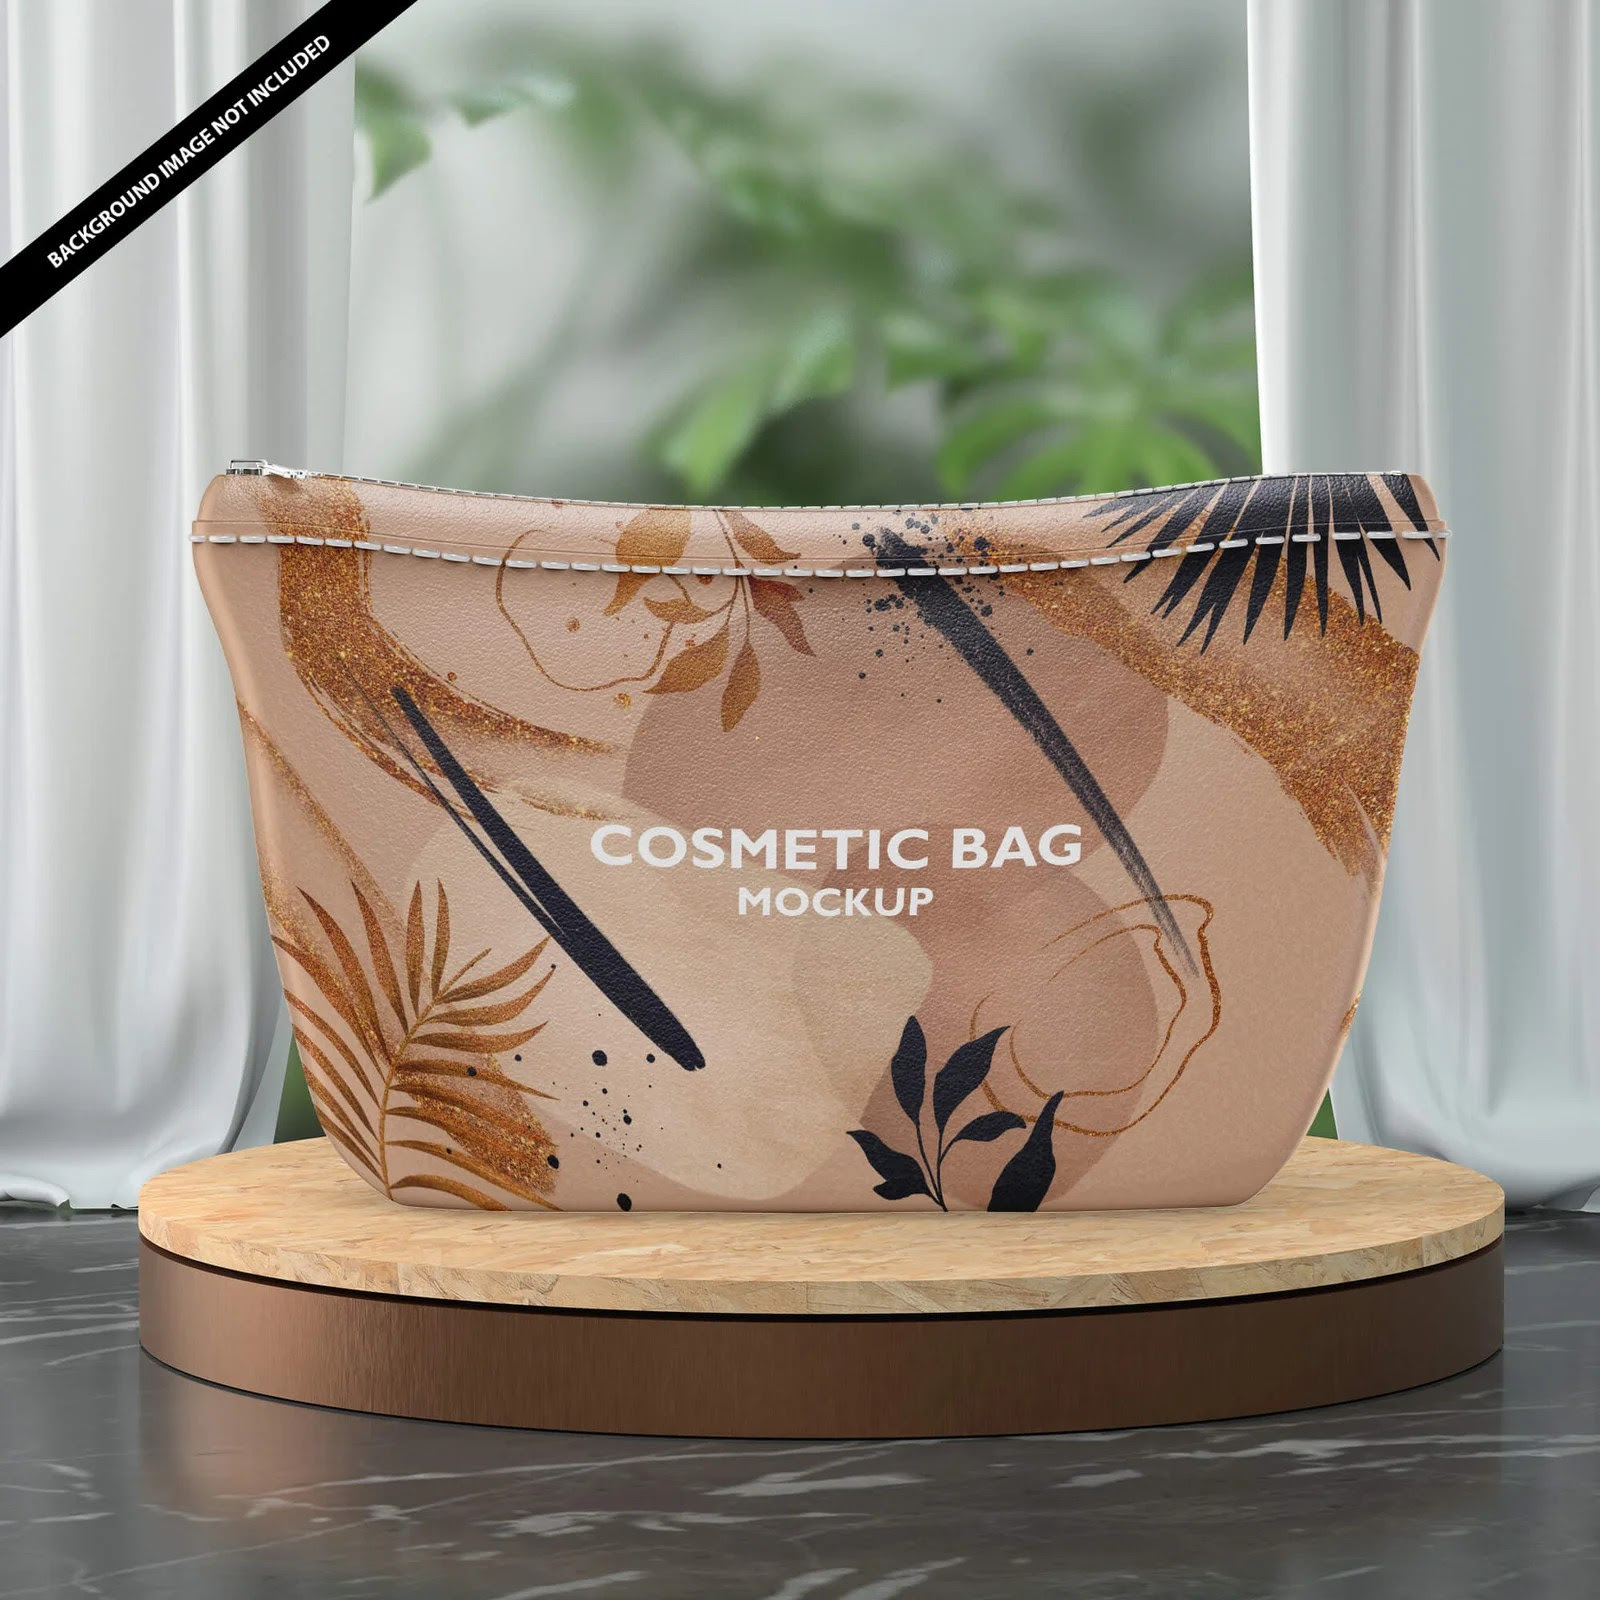 Free Cosmetic Bag Mockup PSD Template Mockup Den